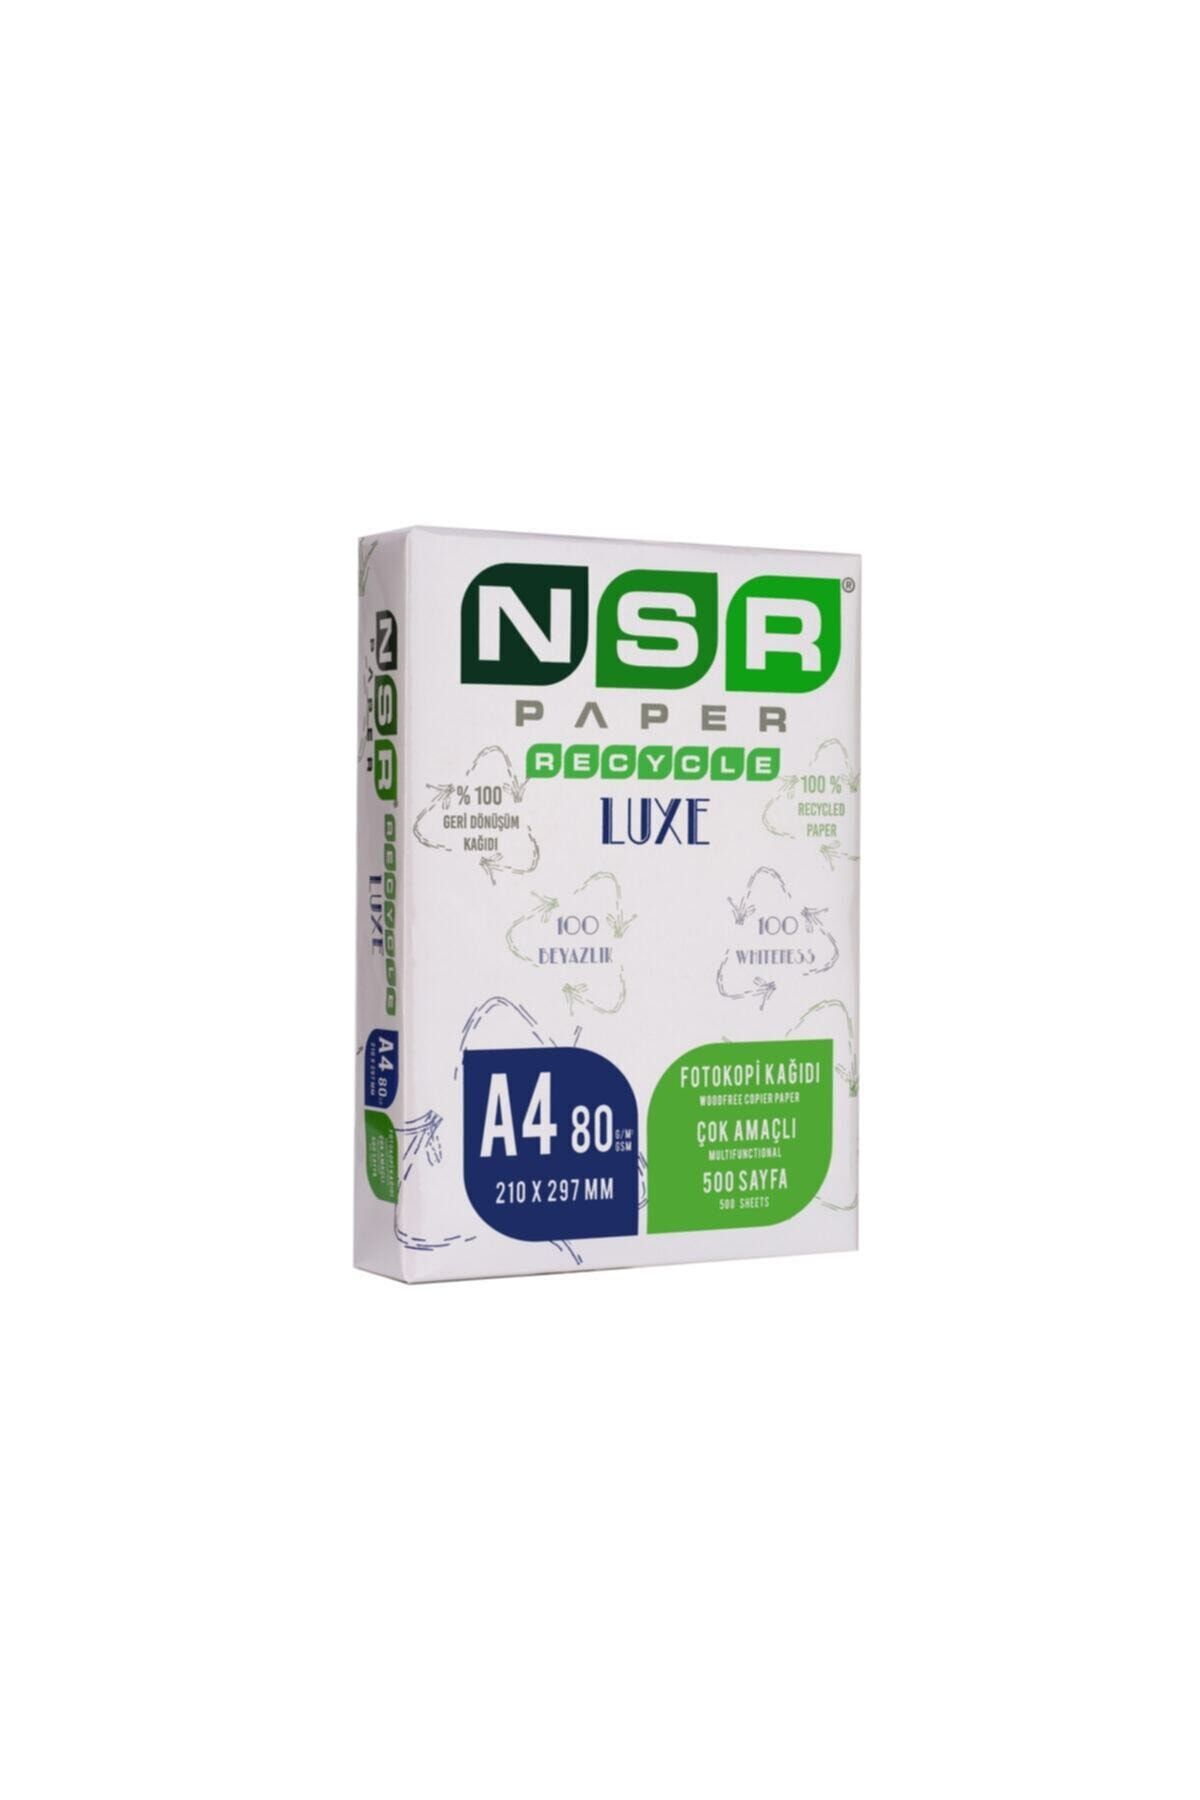 NSR PAPER Recycle Luxe A4 80gsm Fotokopi Kağıdı 500 Sayfa